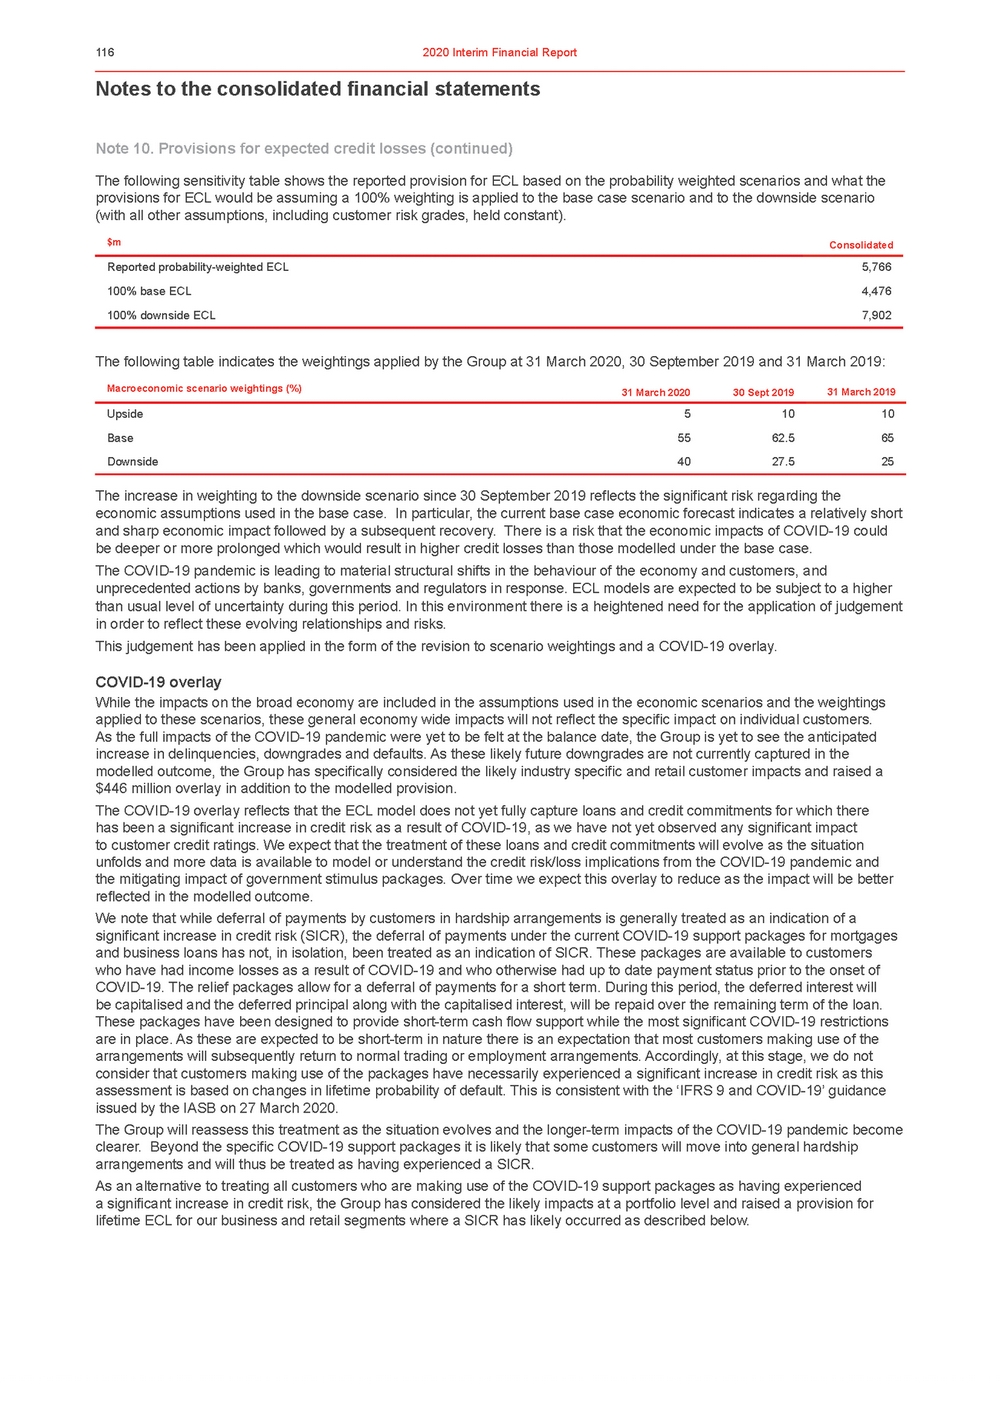 11676-3-ex1_westpac 2020 interim financial results announcement_page_121.jpg